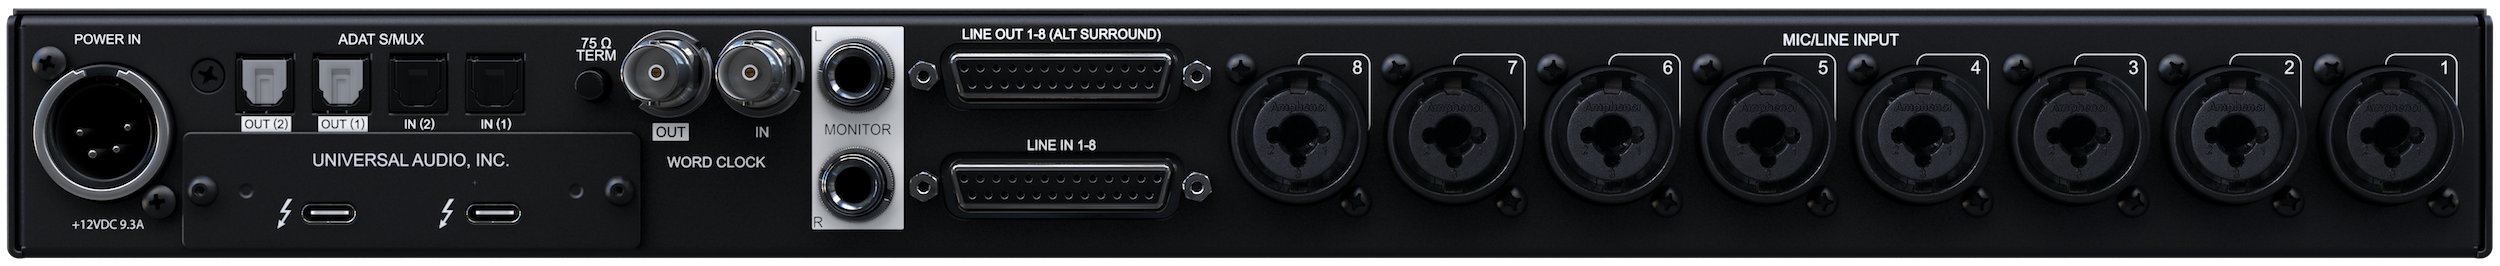 Universal Audio Apollo X8p Heritage Edition - Thunderbolt audio interface - Variation 1